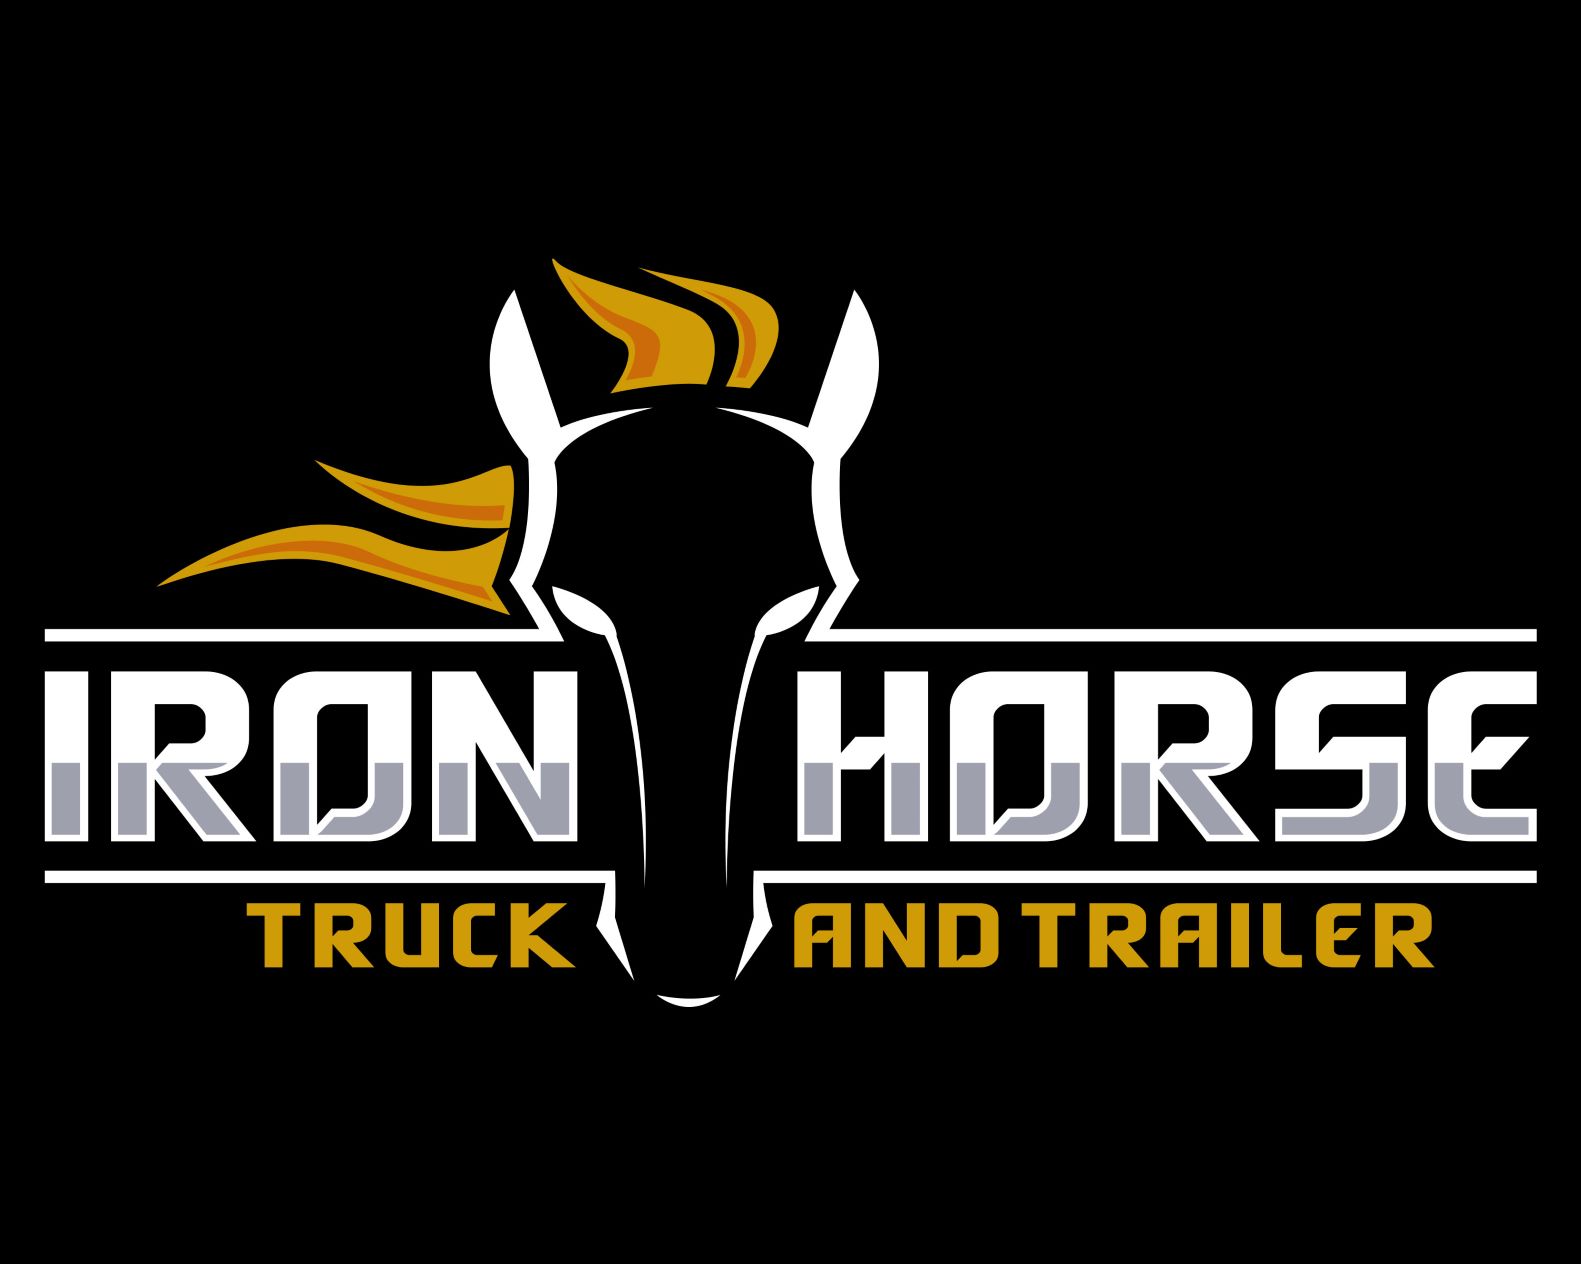 Iron Horse Truck & Trailer